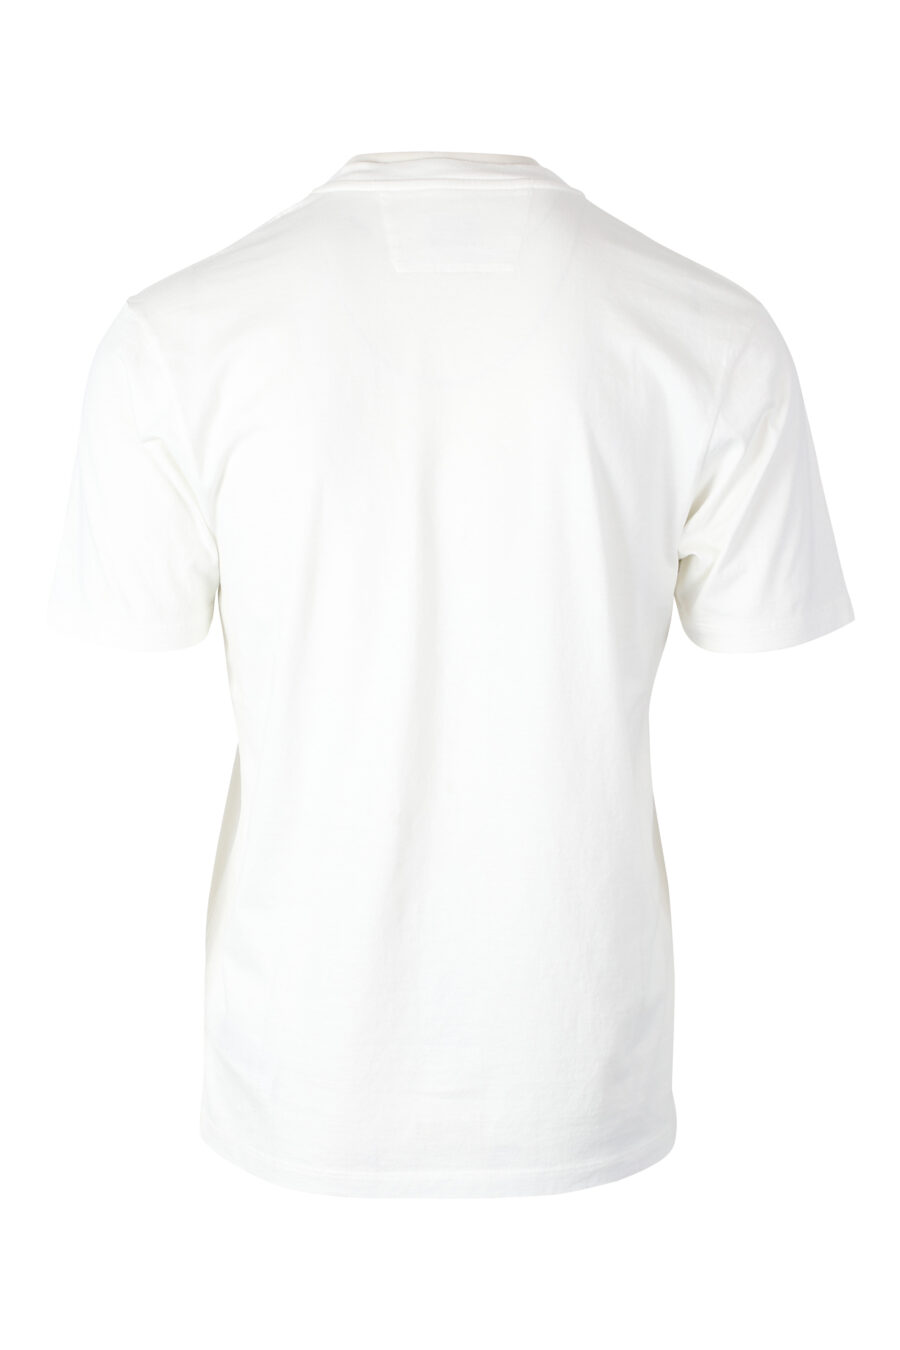 Camiseta blanca con logo "spray" - IMG 2378